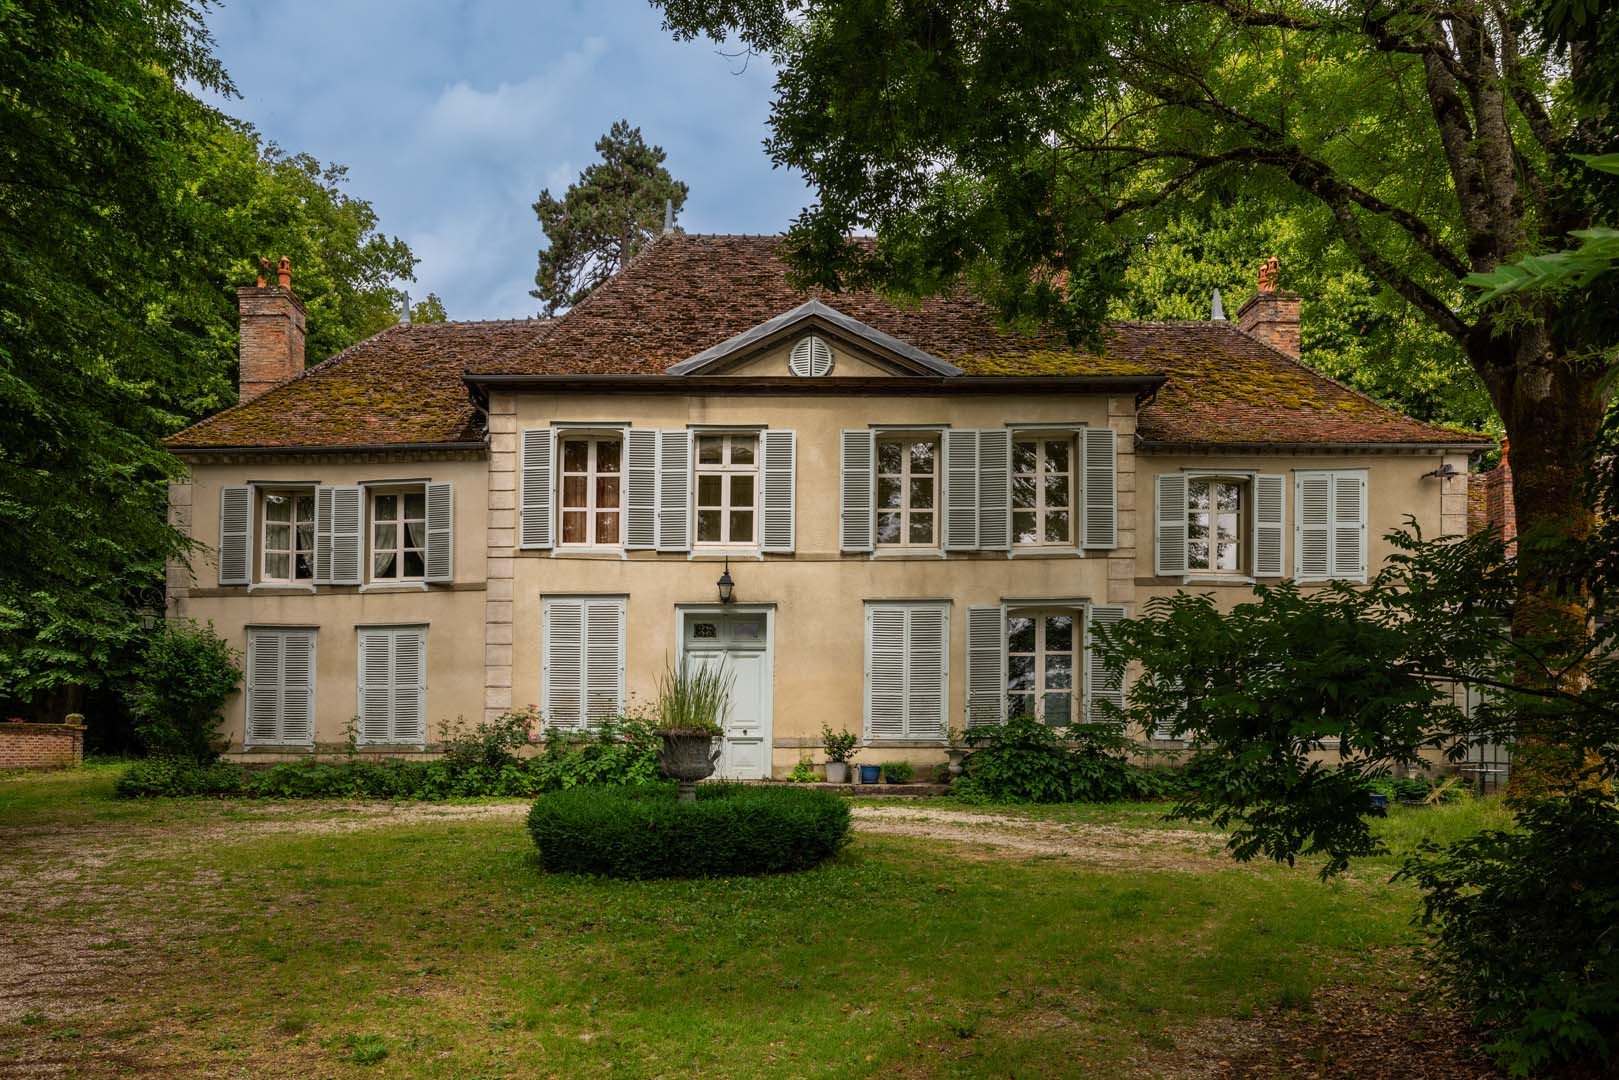 Château de Géraudot - ©Studio OG